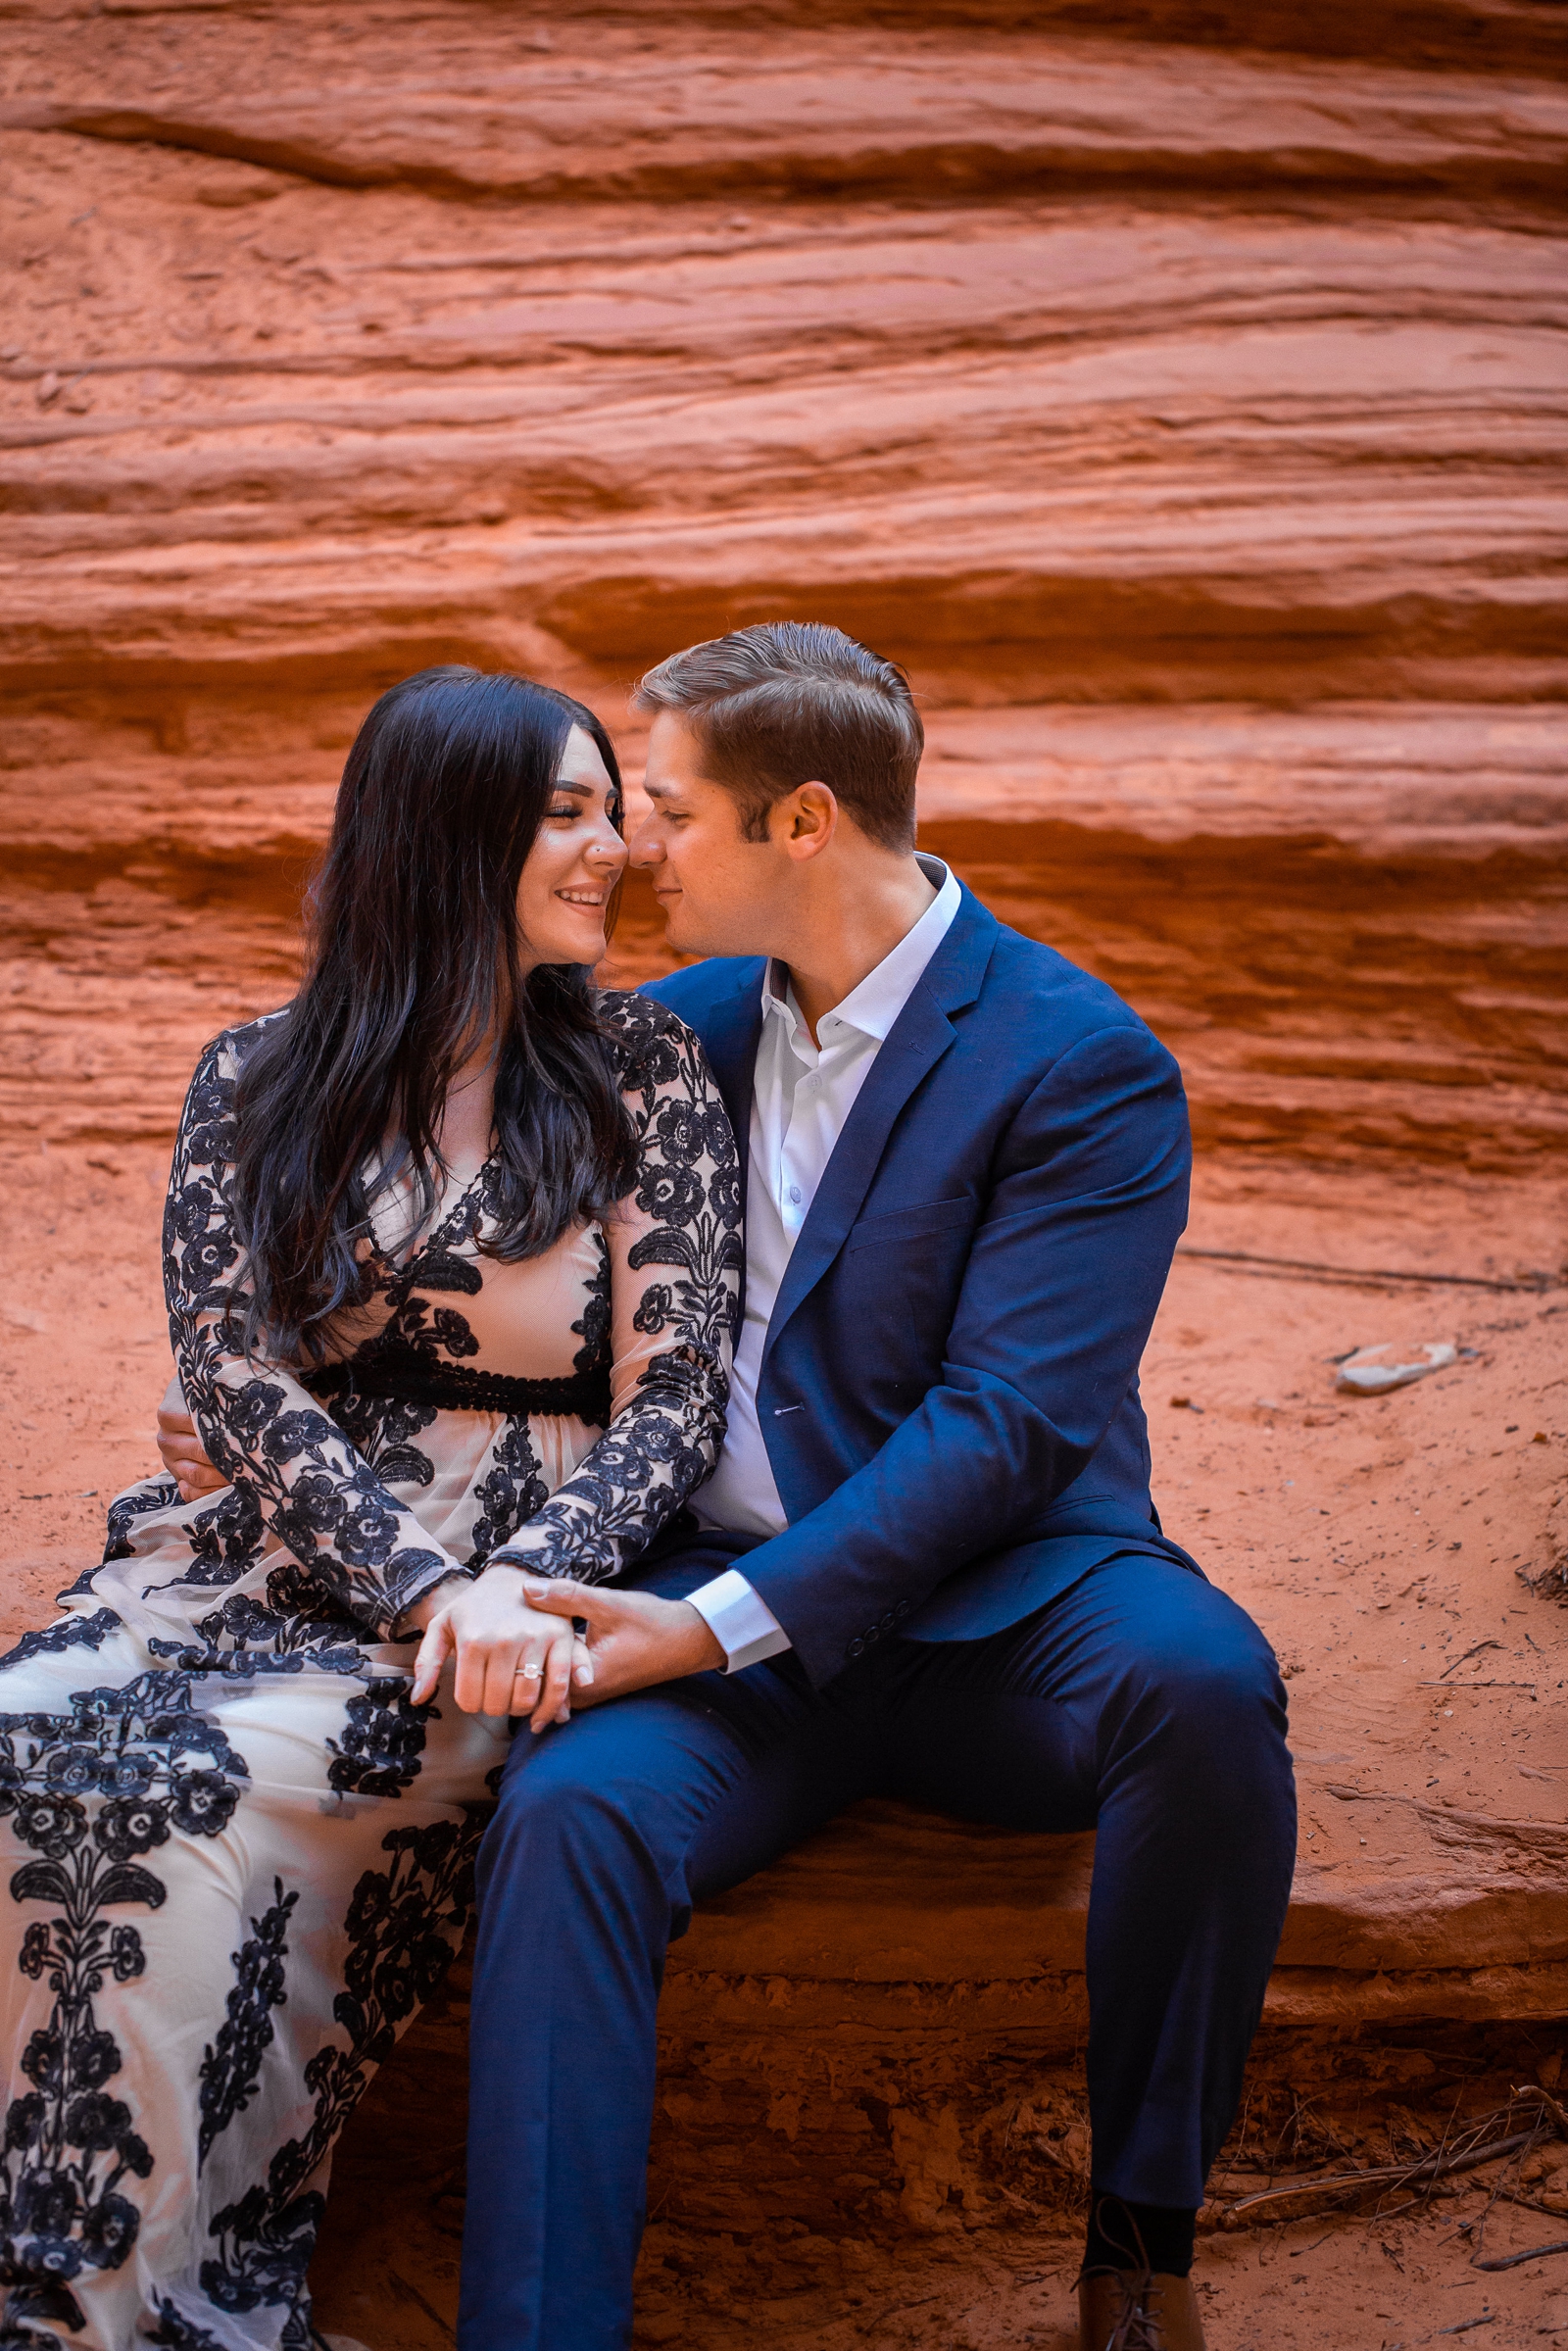 Engaged couple sitting on red rocks in Utah.